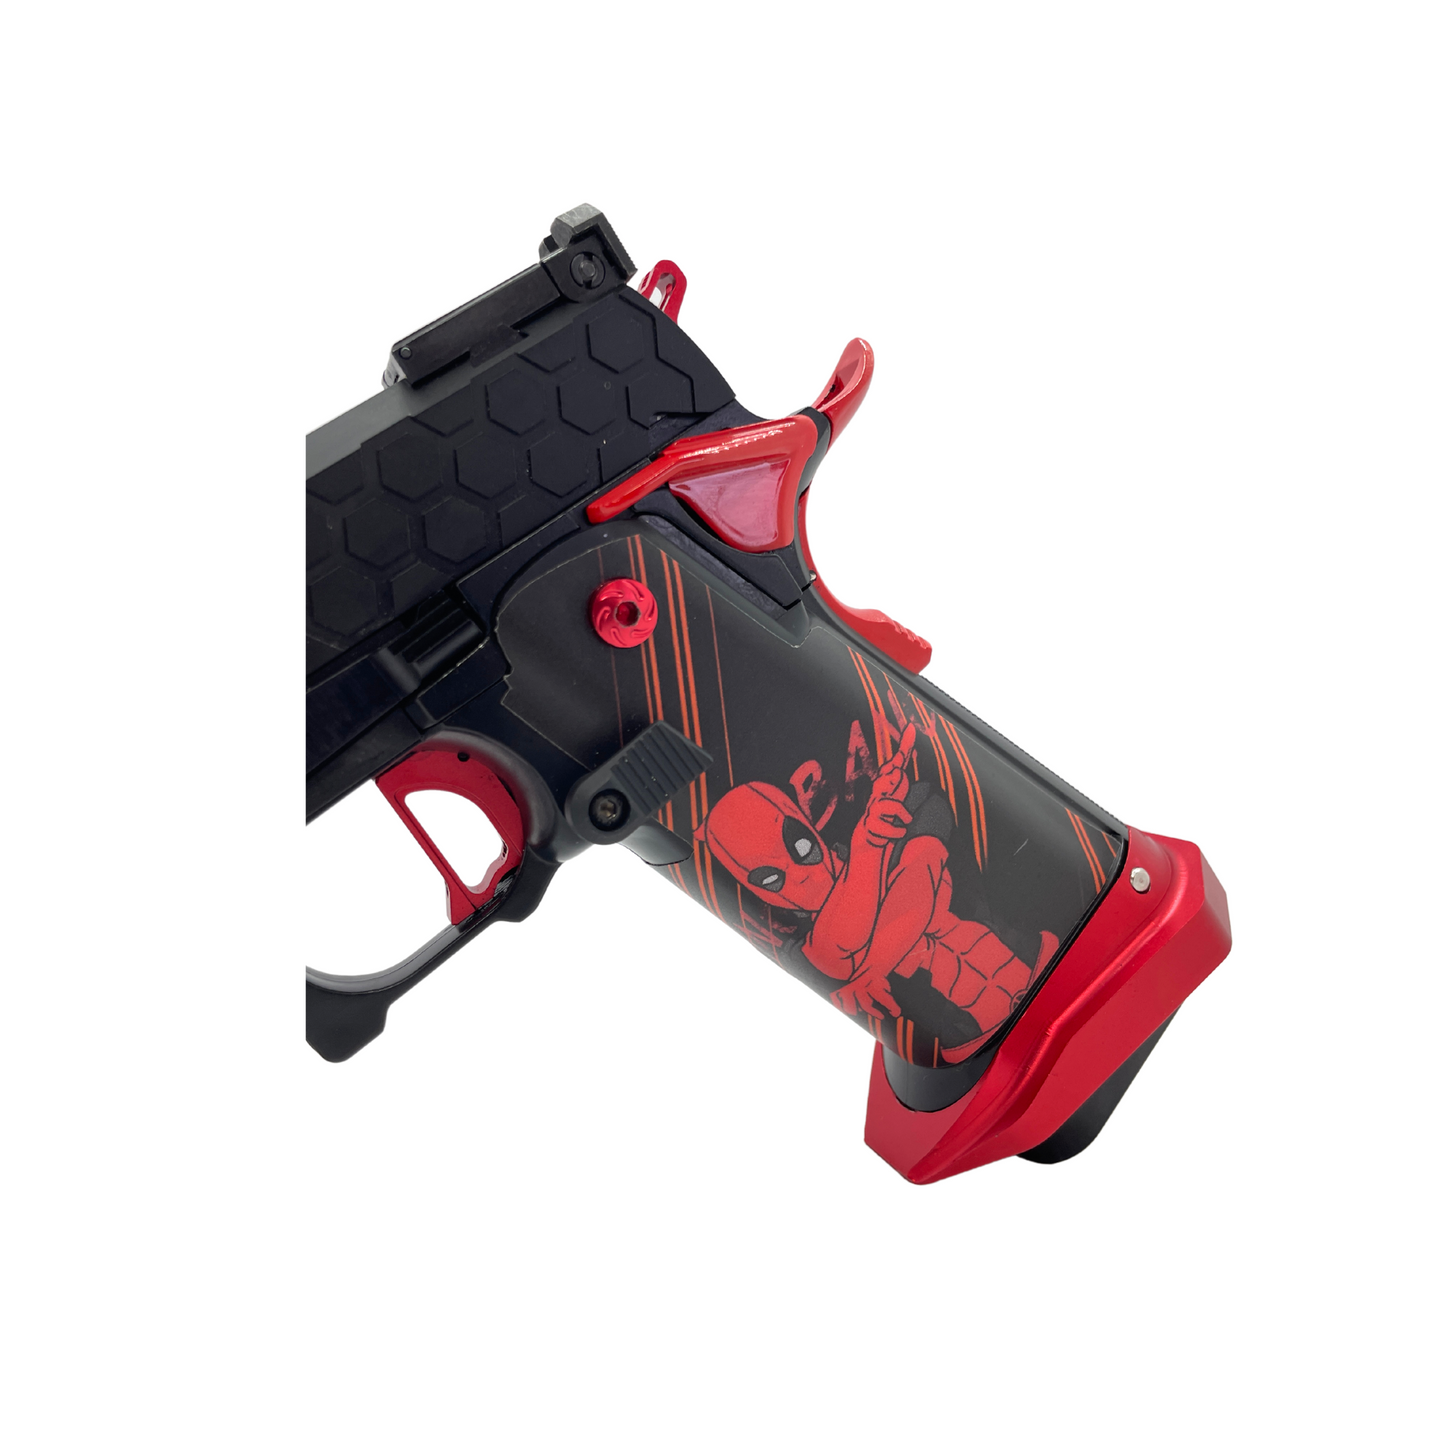 "Deadpool" Custom GBU Hi-Capa 5.1 Gas Pistol - Gel Blaster